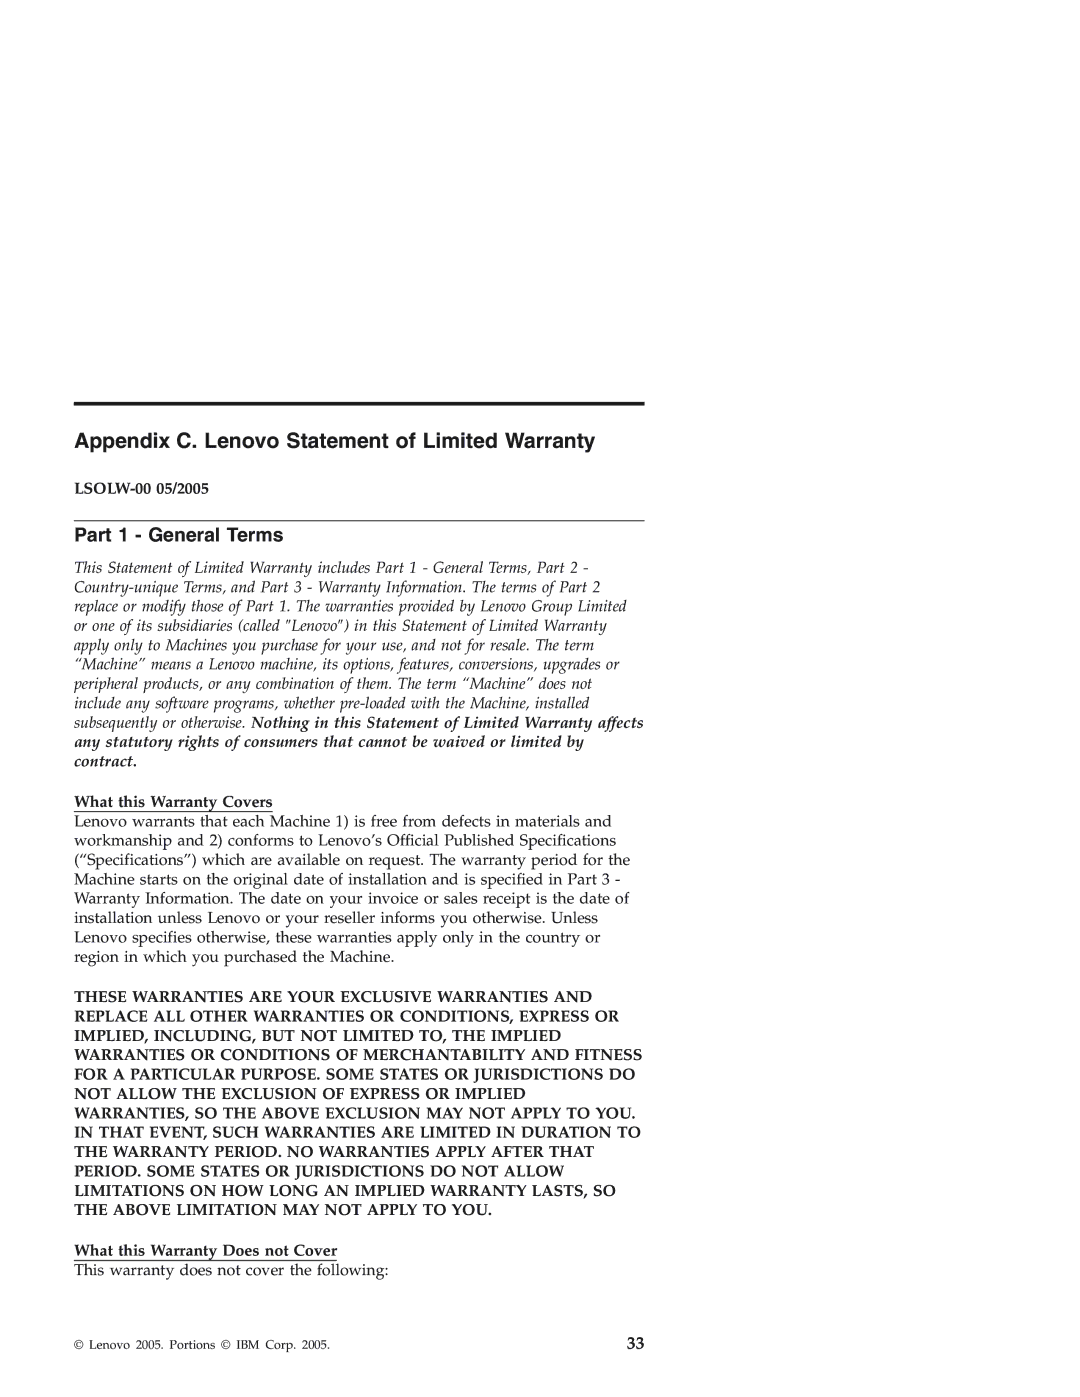 Lenovo 3000 J warranty Appendix C. Lenovo Statement of Limited Warranty, Part 1 General Terms, LSOLW-00 05/2005 